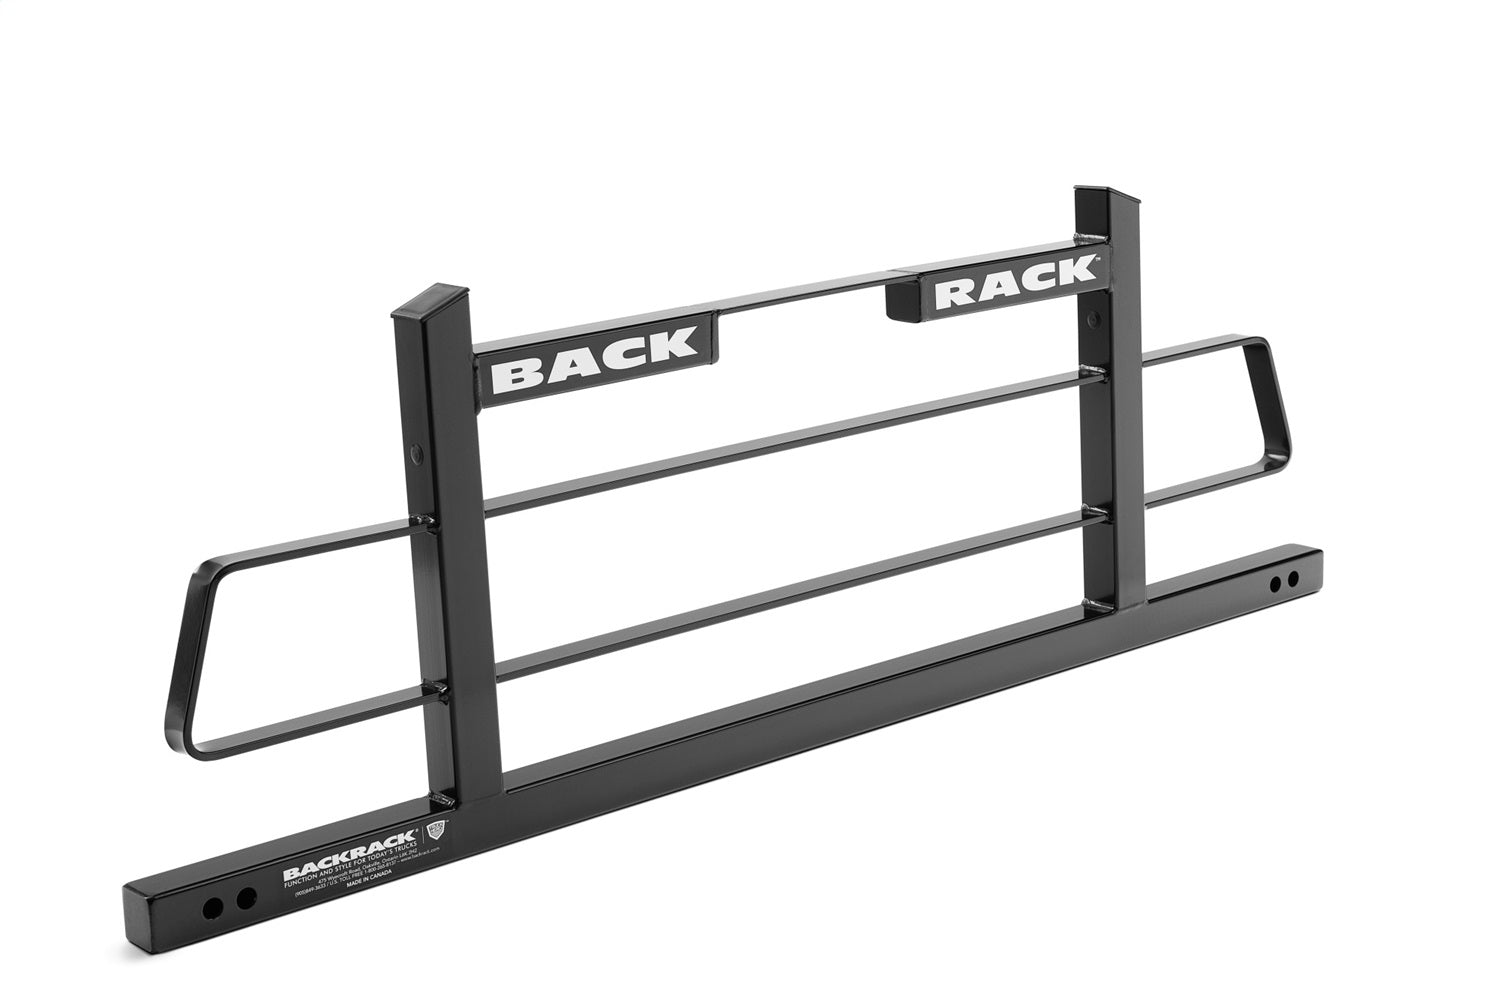 Backrack 15016 Backrack Headache Rack Frame Fits 87-21 Dakota Frontier